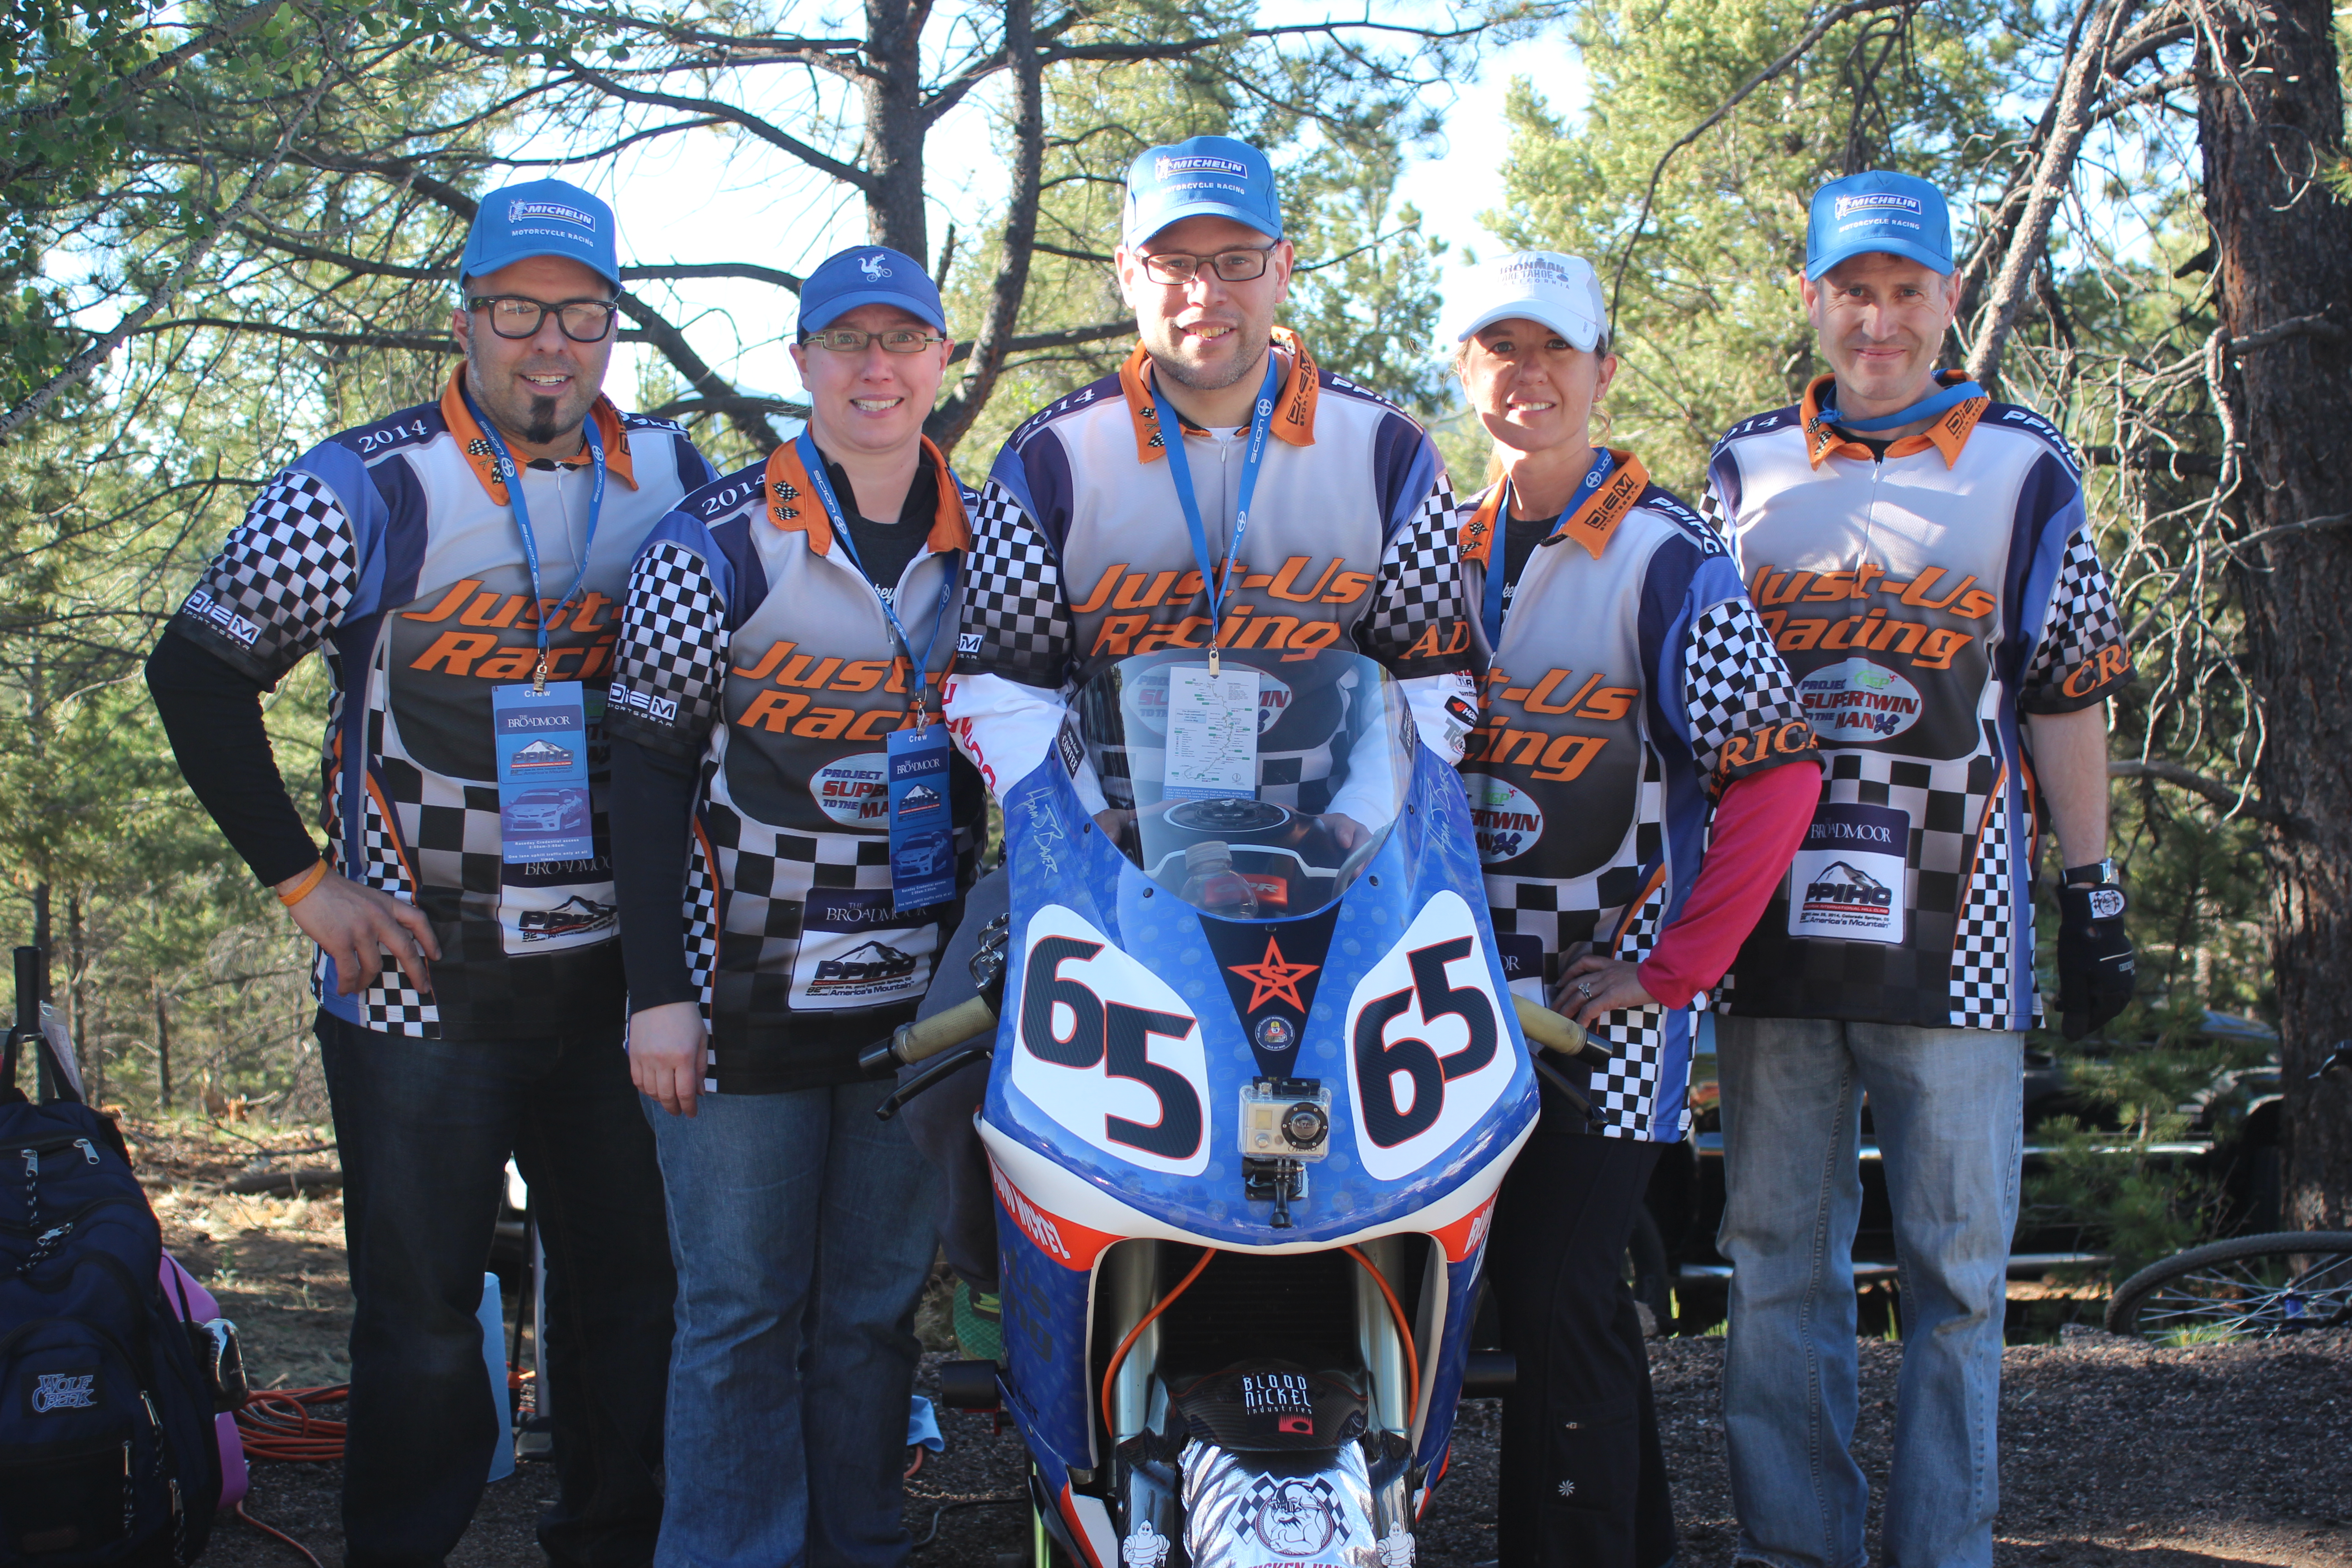 2014 PPIHC Team Just-Us Racing from left to right, Joey Kasper, Susan Bauer, Adam Bauer, Erica Bibeau, and Craig Bibeau.